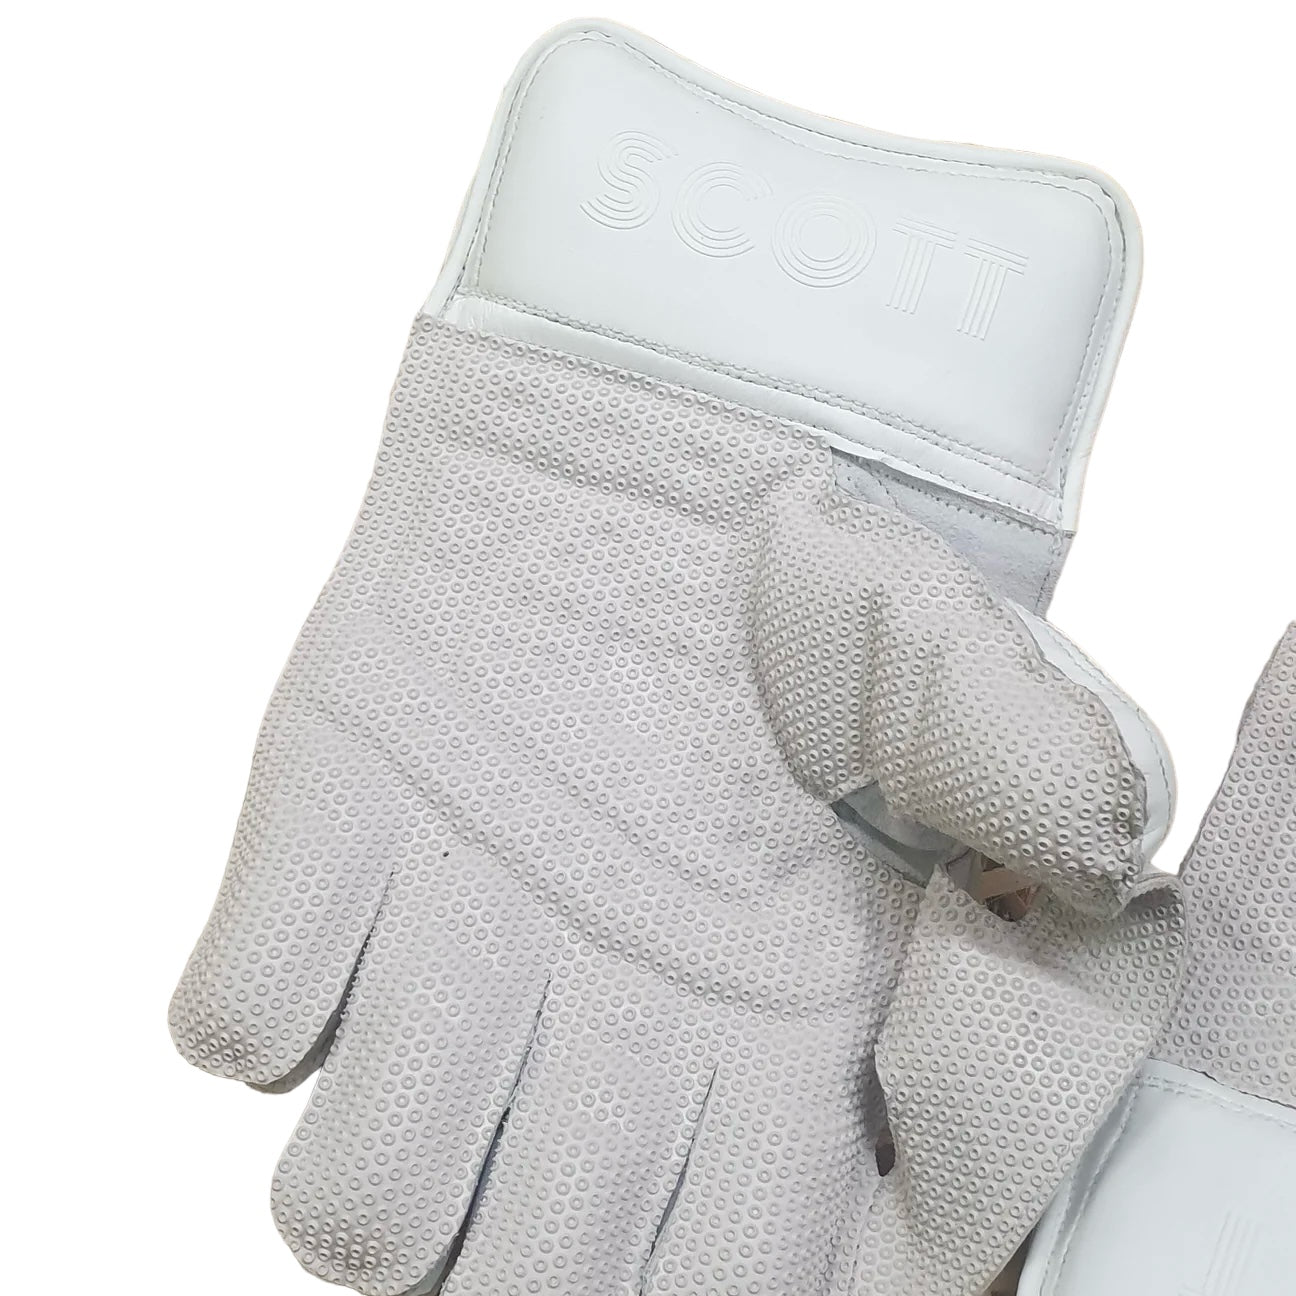 Scott Cricket Wicket Keeping Gloves - The Cricket Store